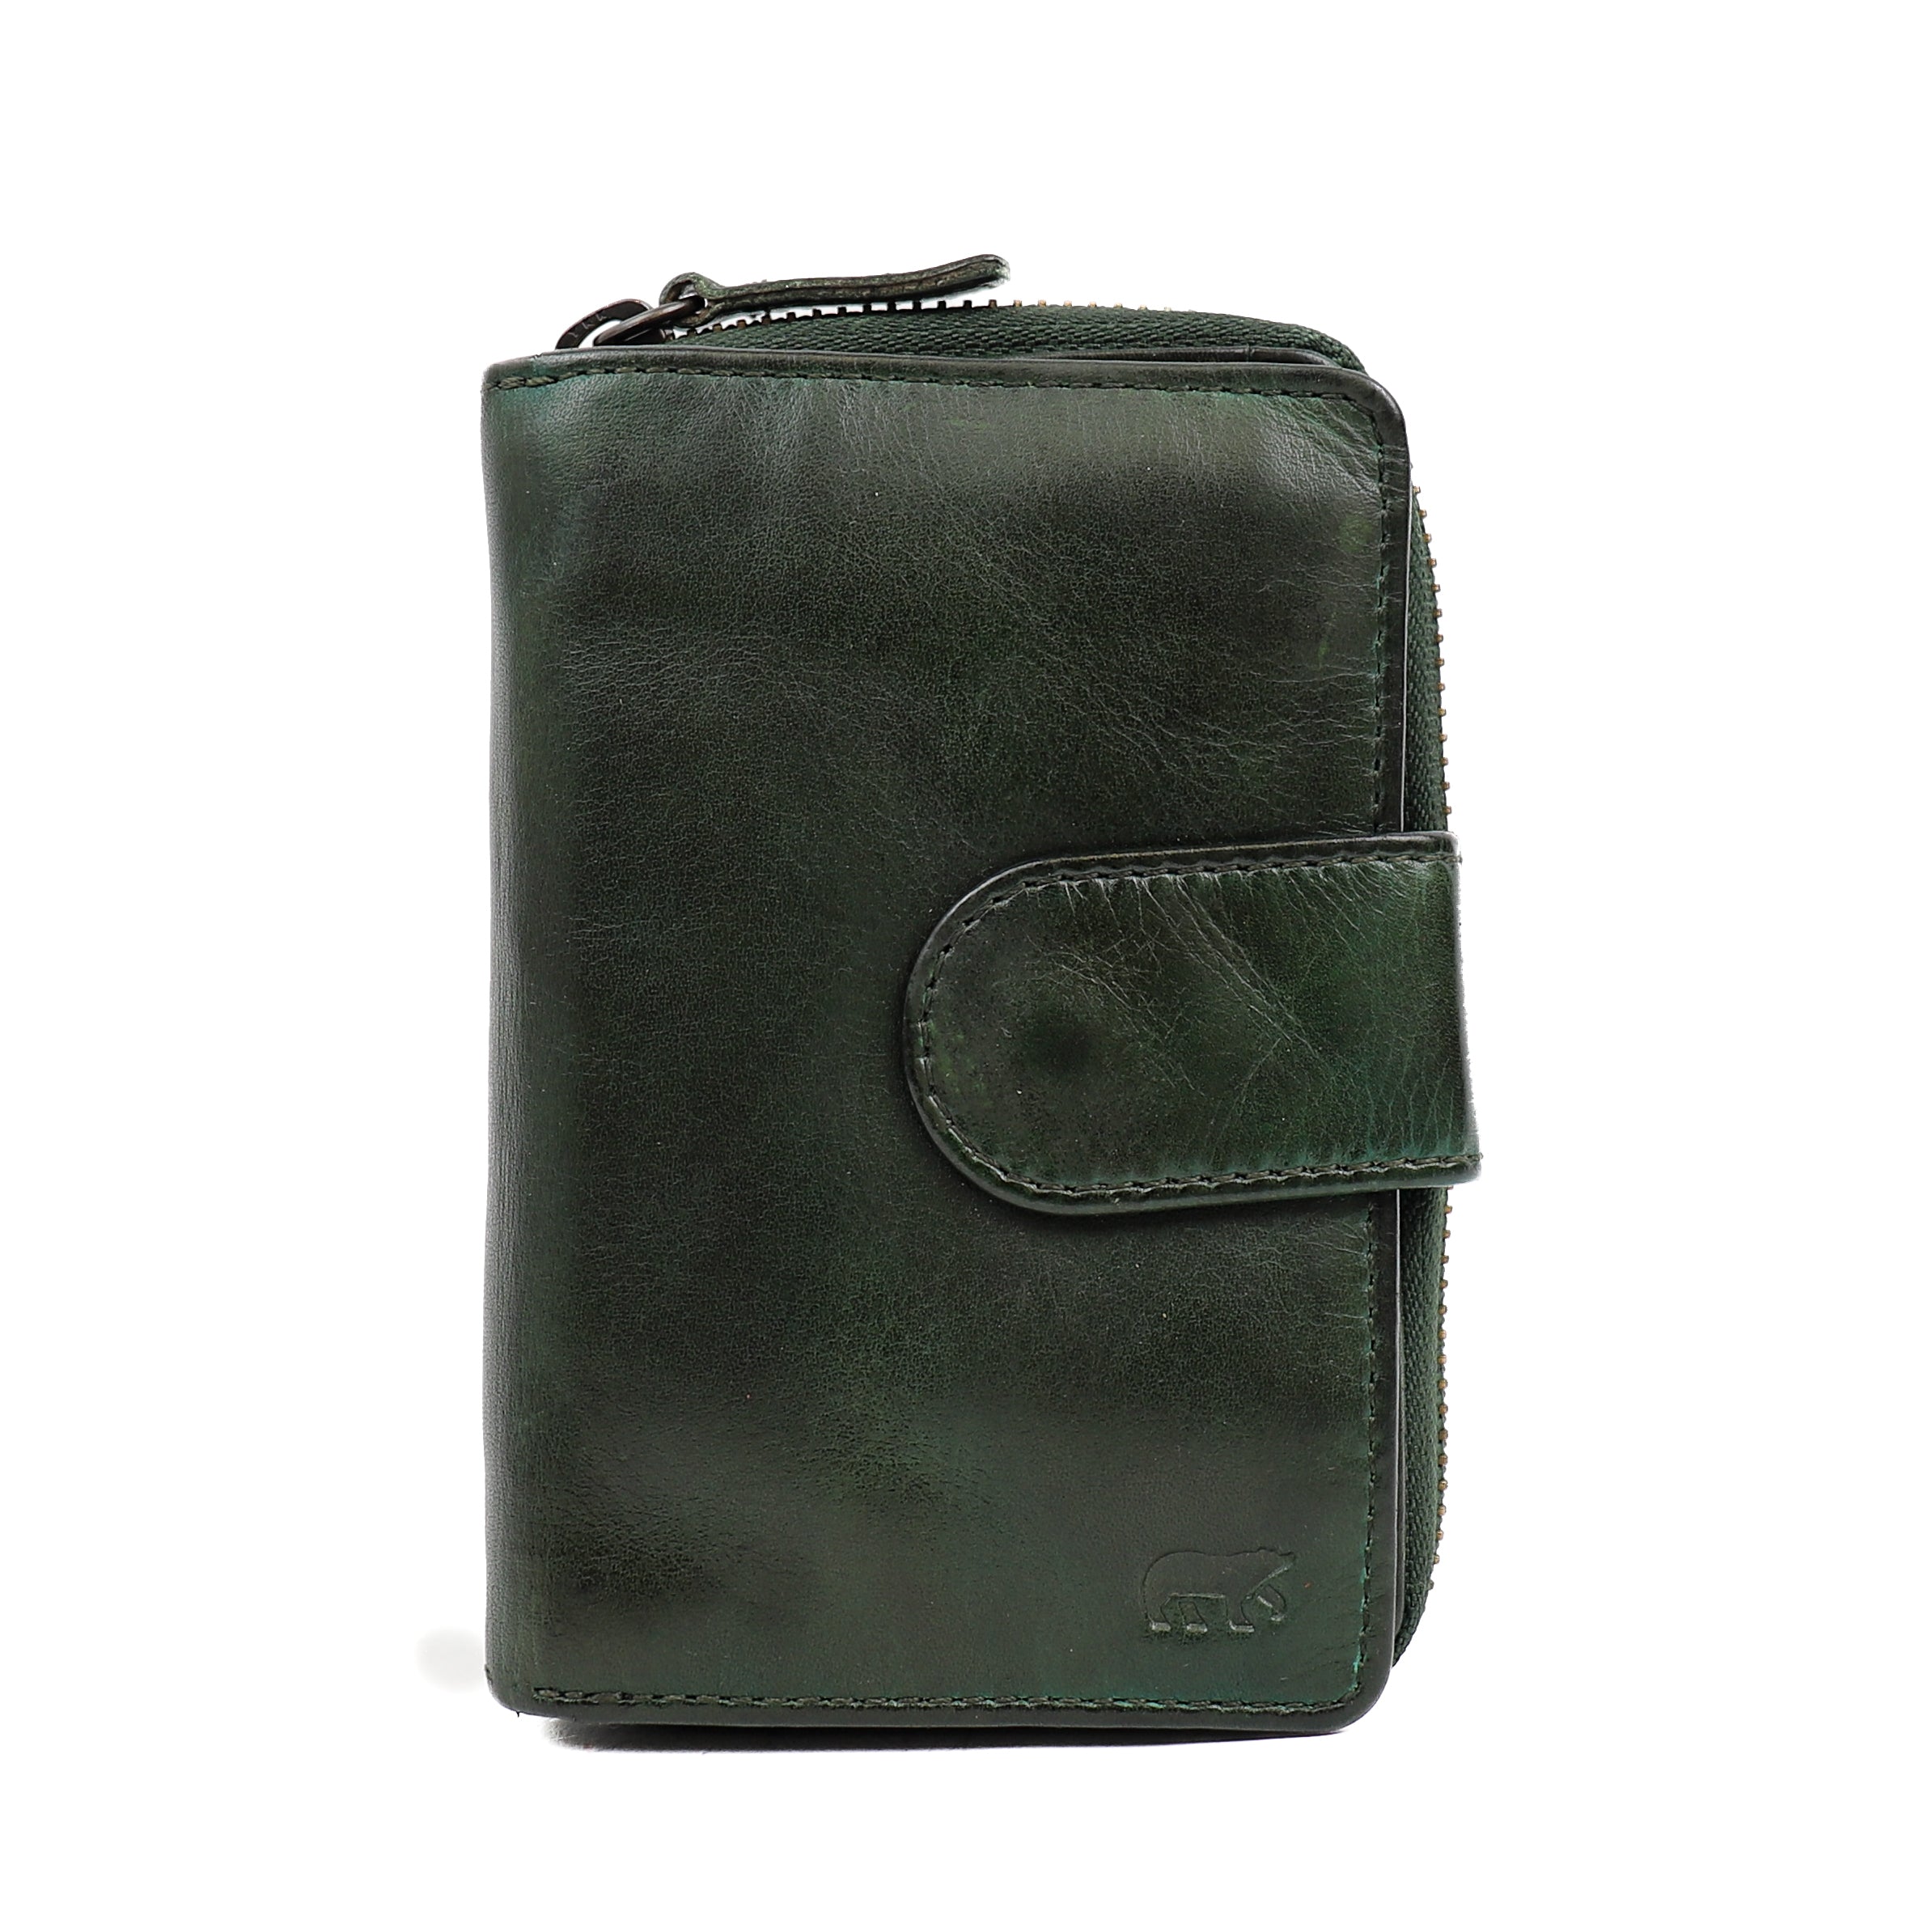 Zipper wallet 'Loet' olive green - CL 13550